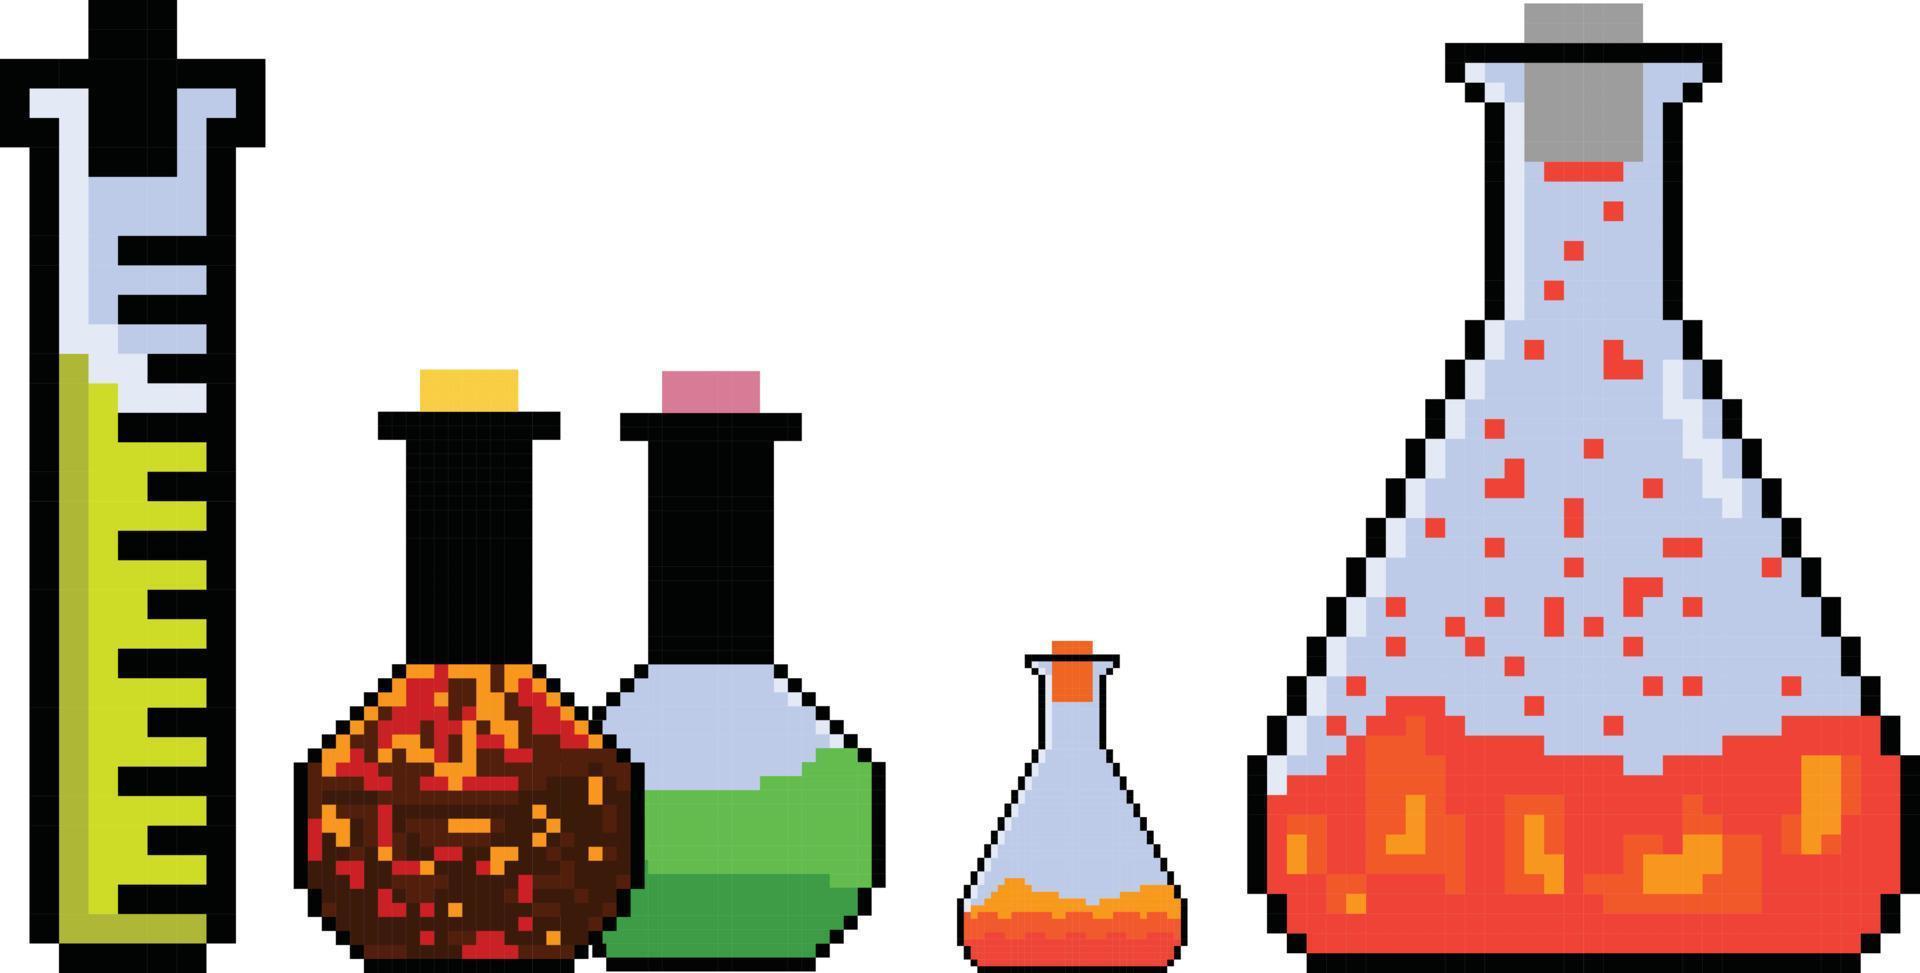 tubo de ensaio de pixel art, conjunto de pixels de vidraria de laboratório de ciências. vetor